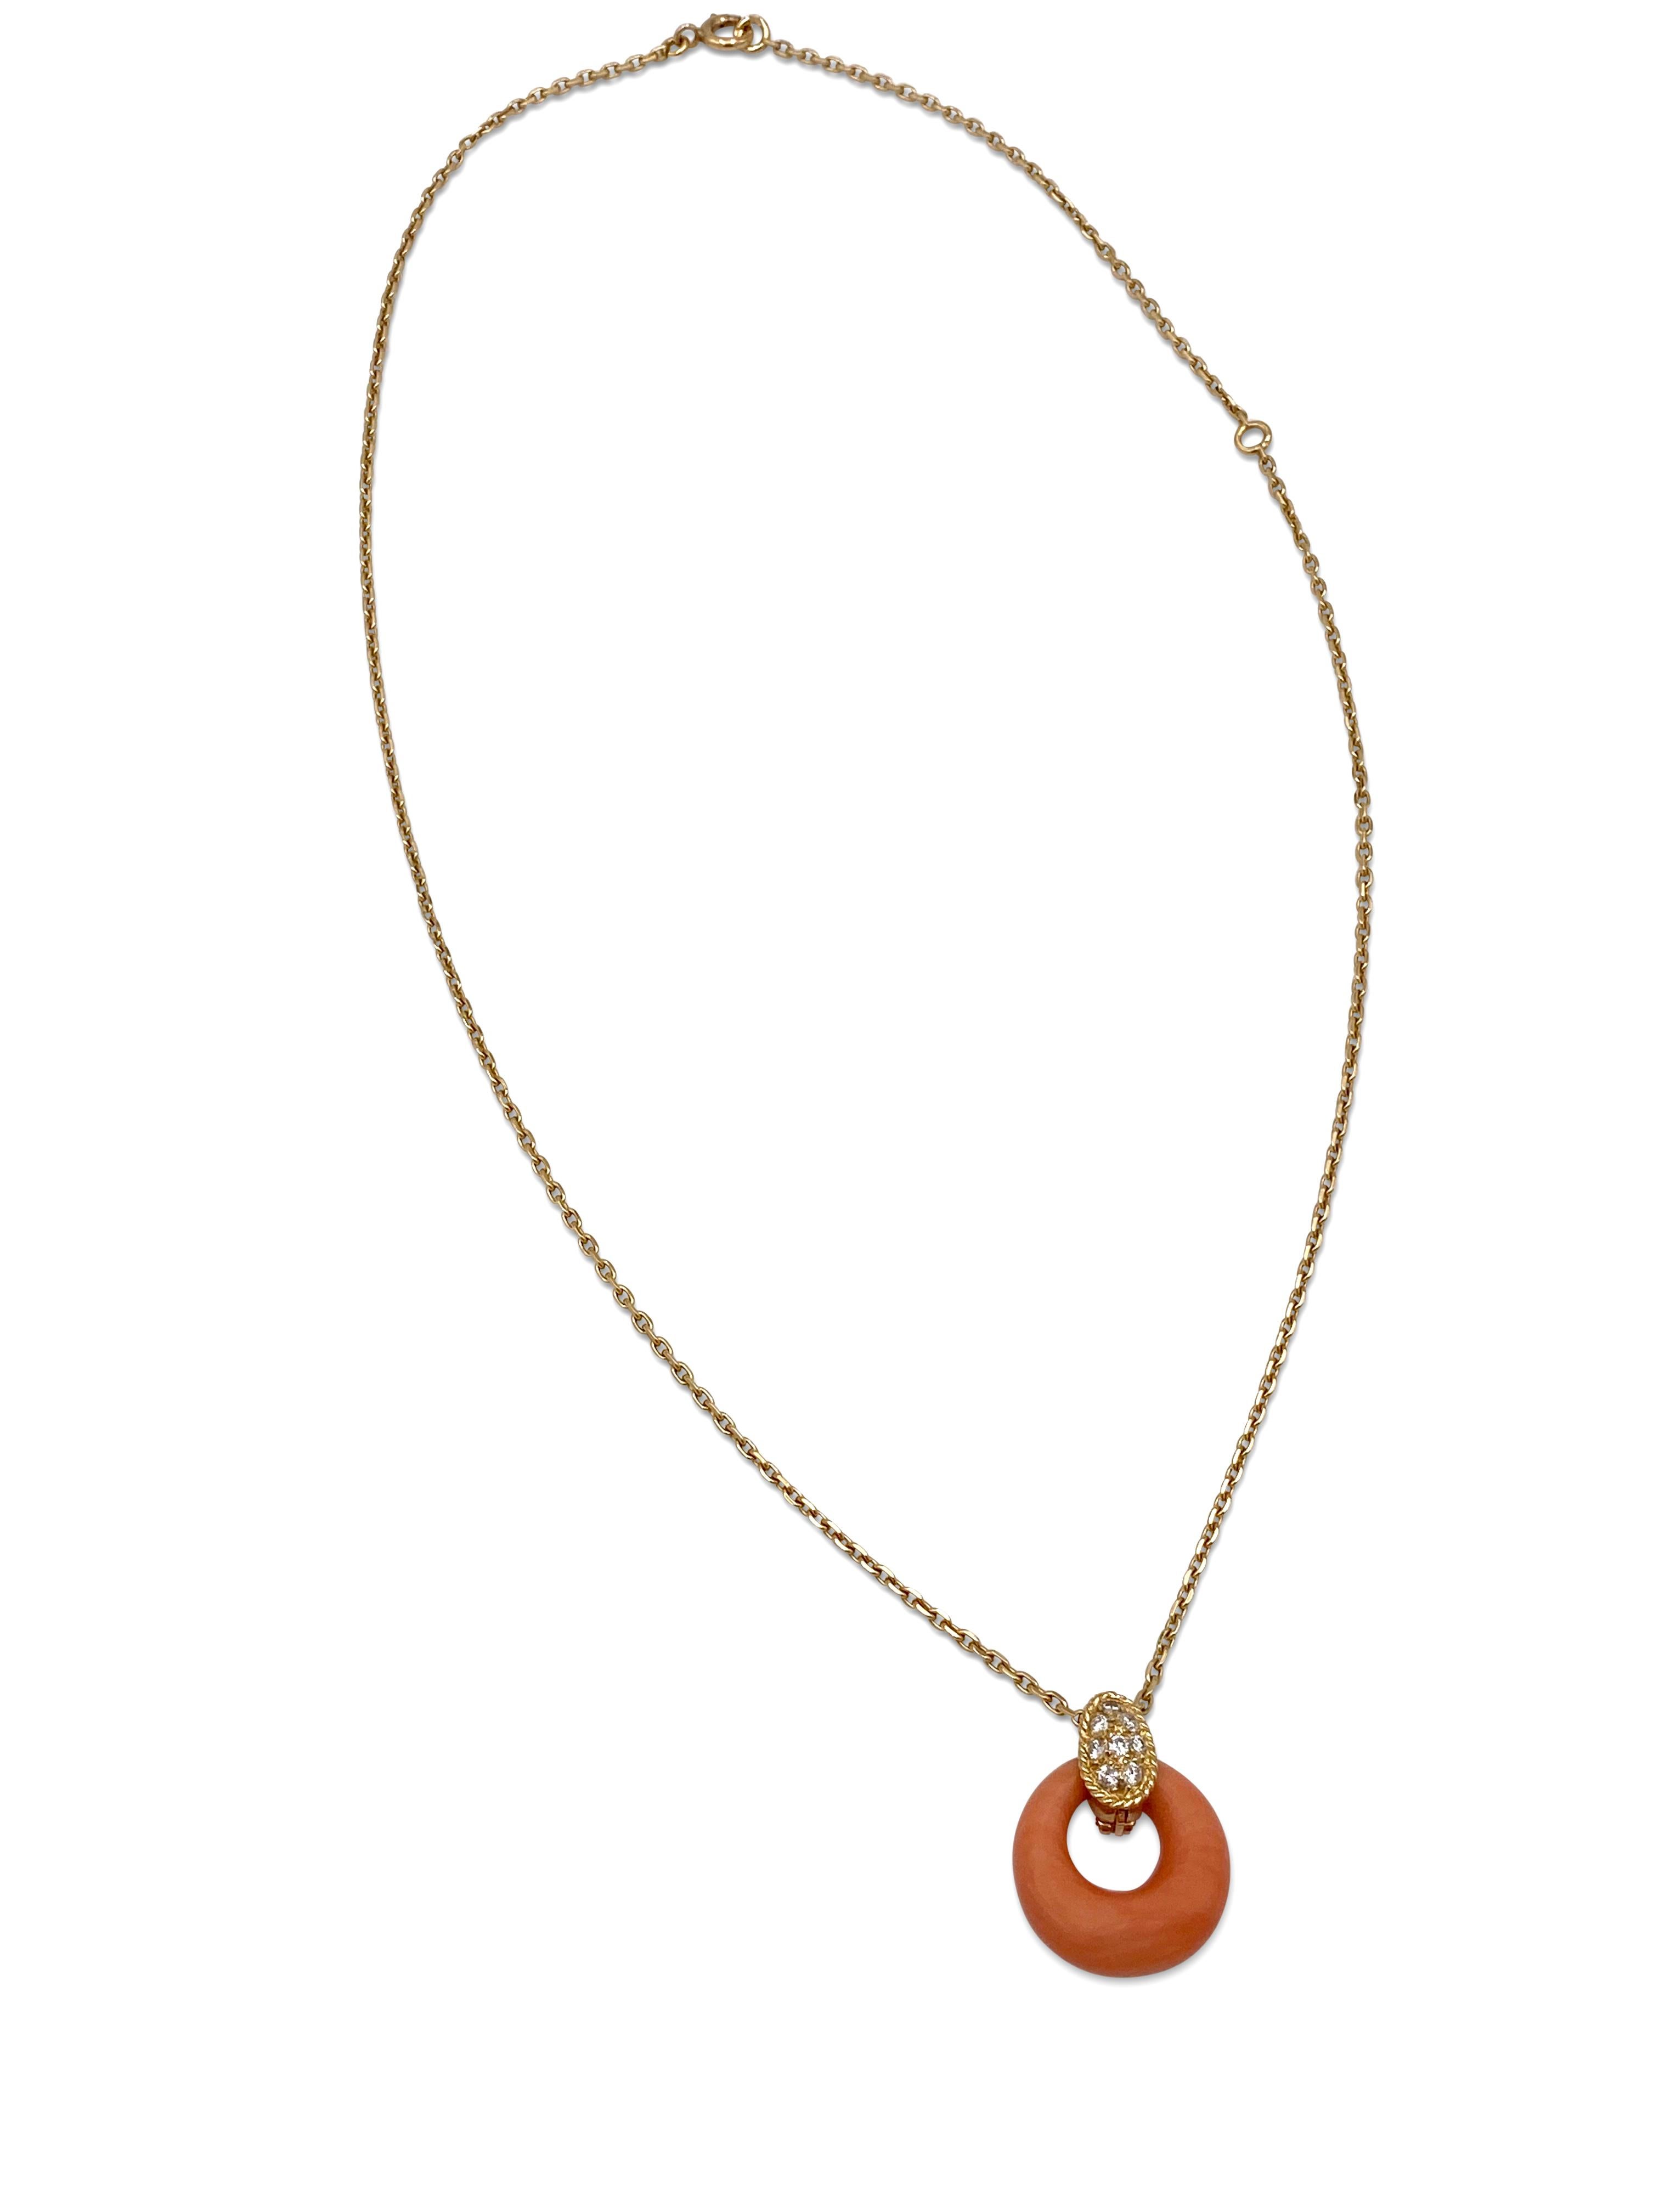 Round Cut Van Cleef & Arpels Gold Diamond Necklace with Interchangeable Pendants